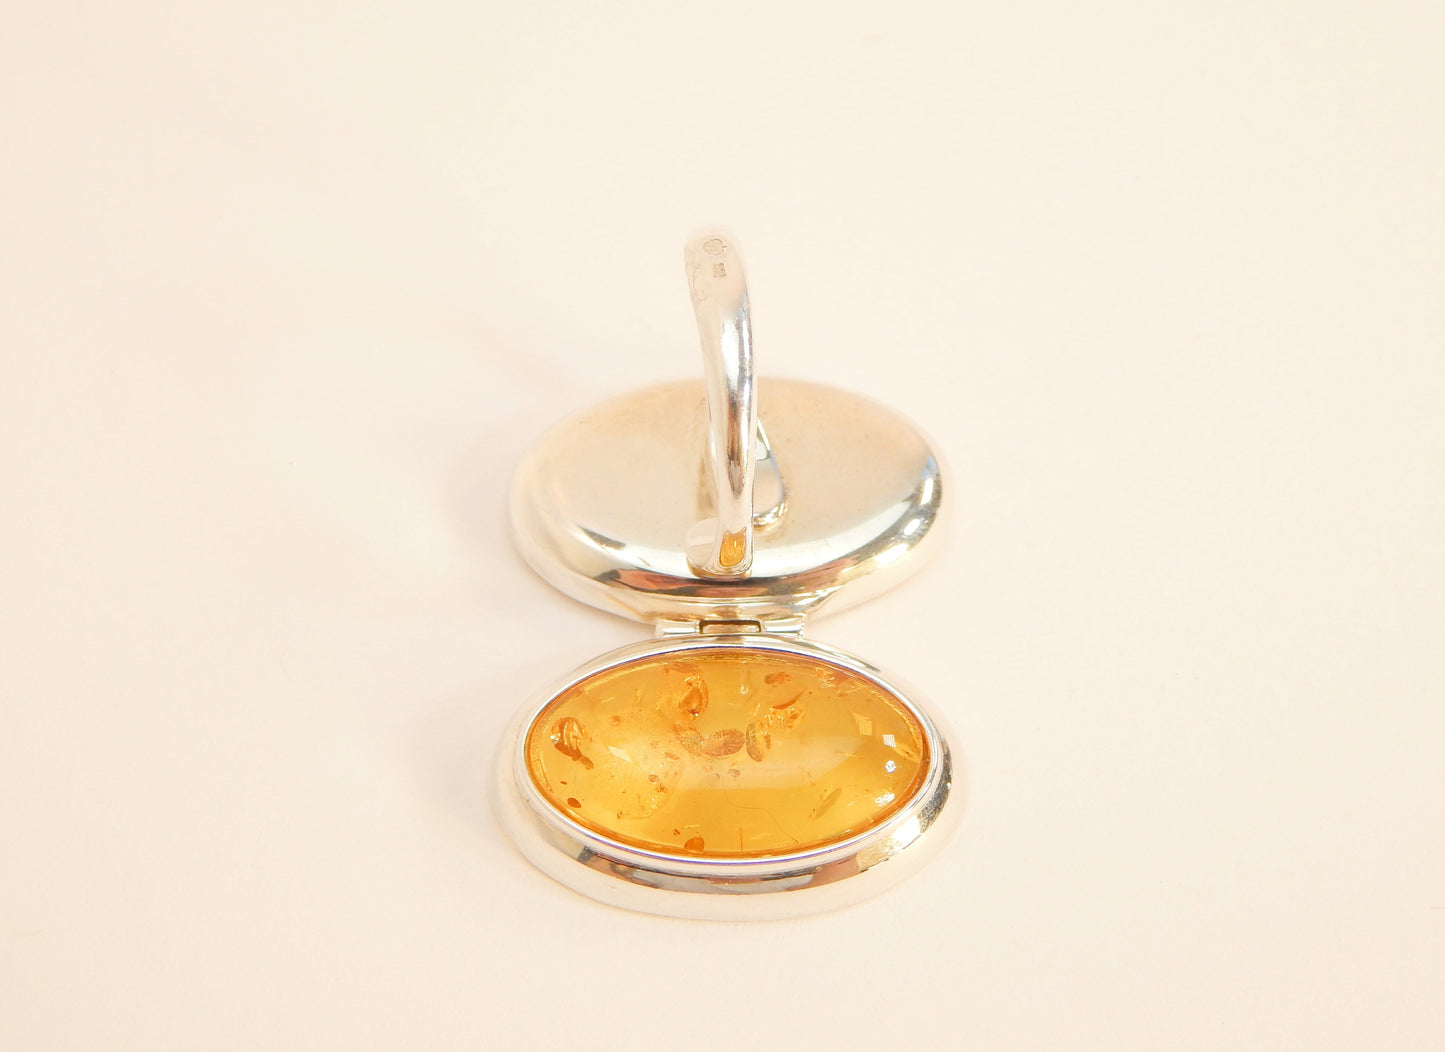 Natural Baltic Lemon Amber Adjustable Poison Ring in 925 Sterling Silver